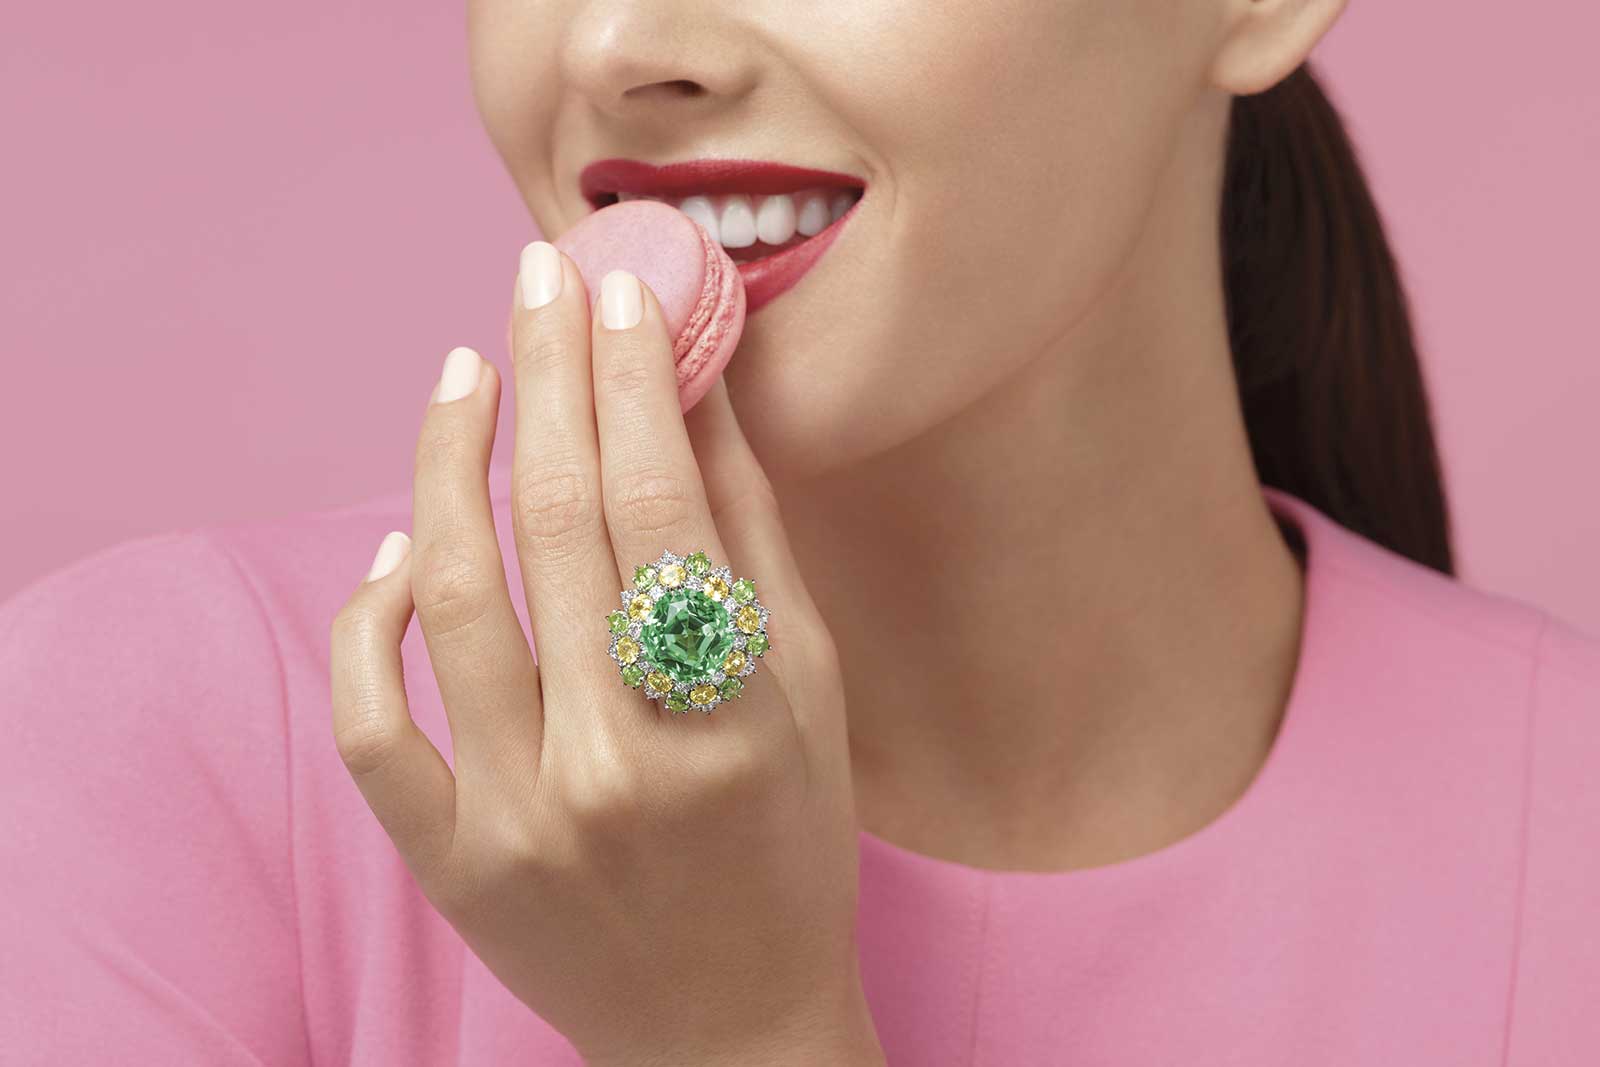 Harry Winston 'Winston Candy' ring with 19.67ct cushion cut green tourmaline, yellow sapphires, peridots and diamonds